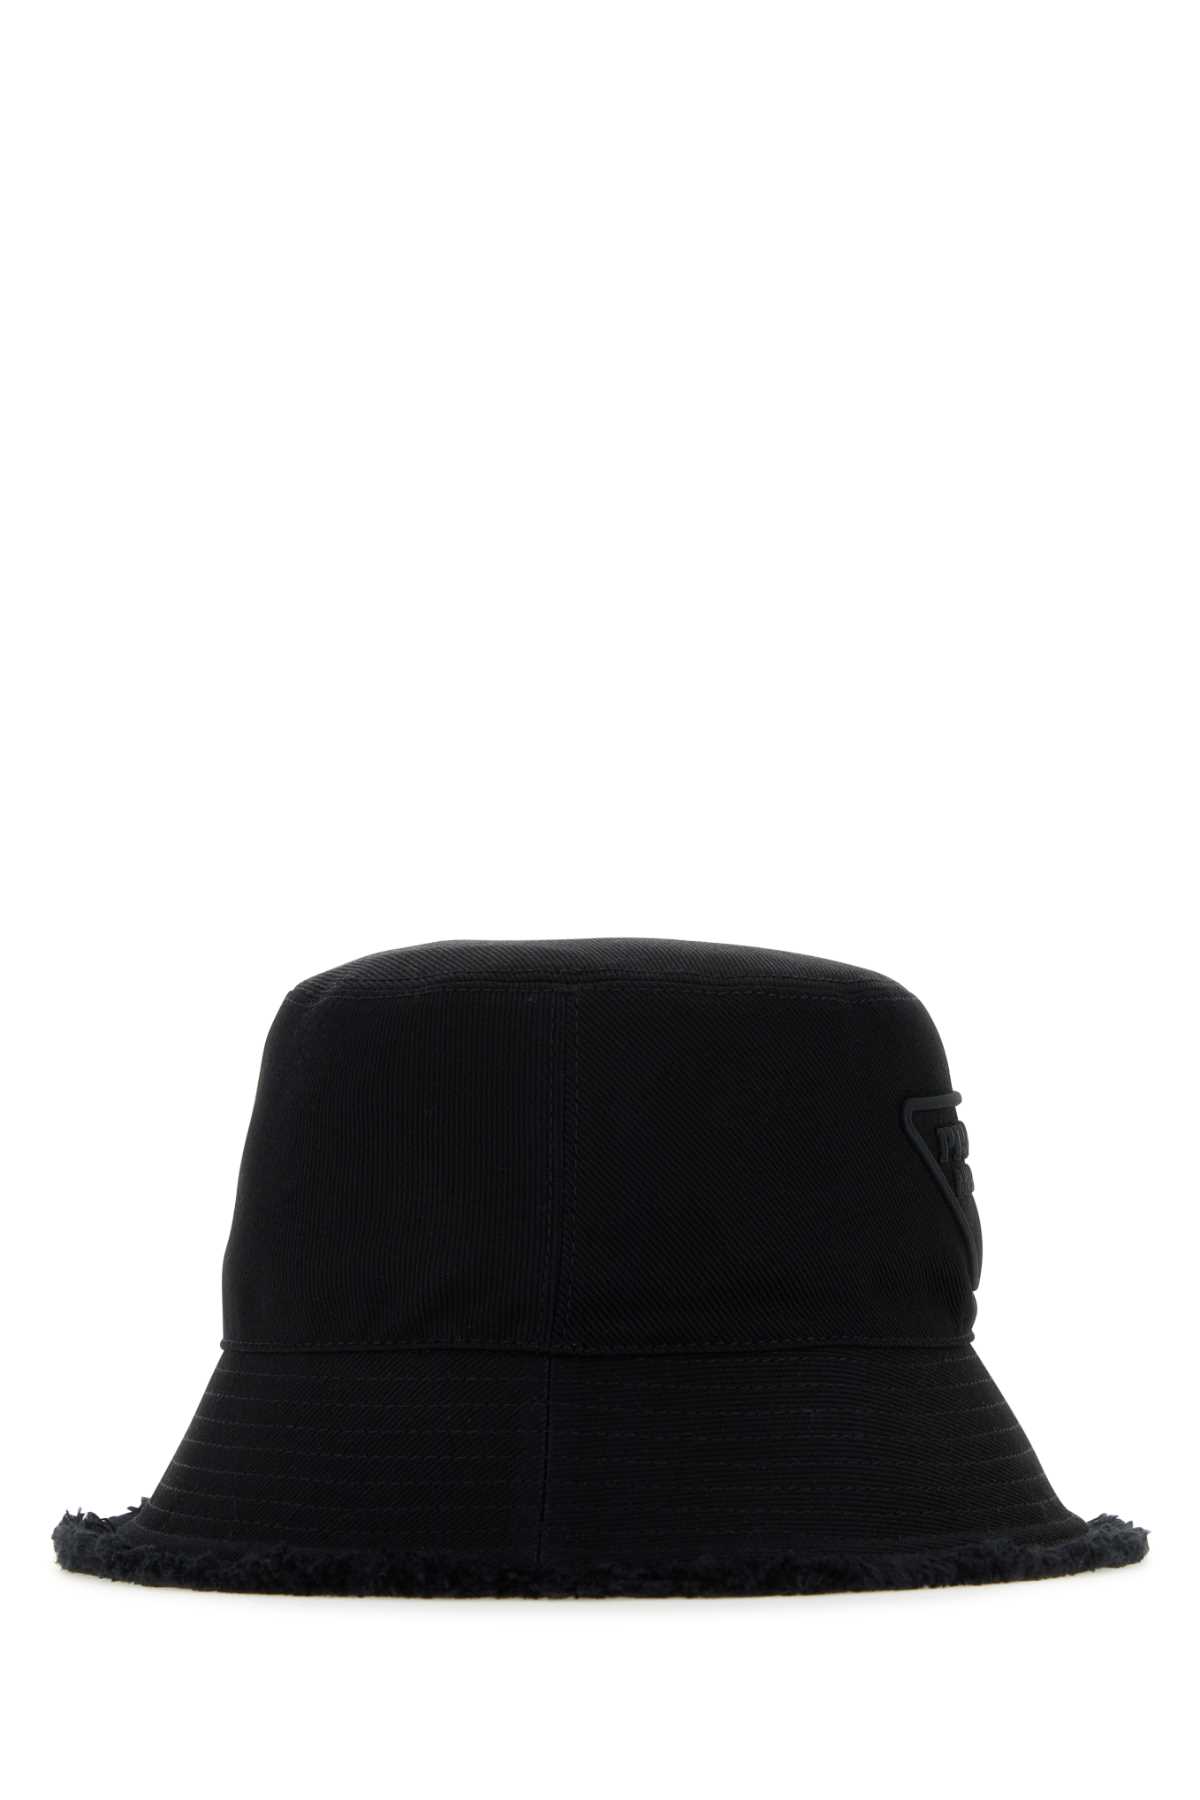 PRADA BLACK COTTON HAT